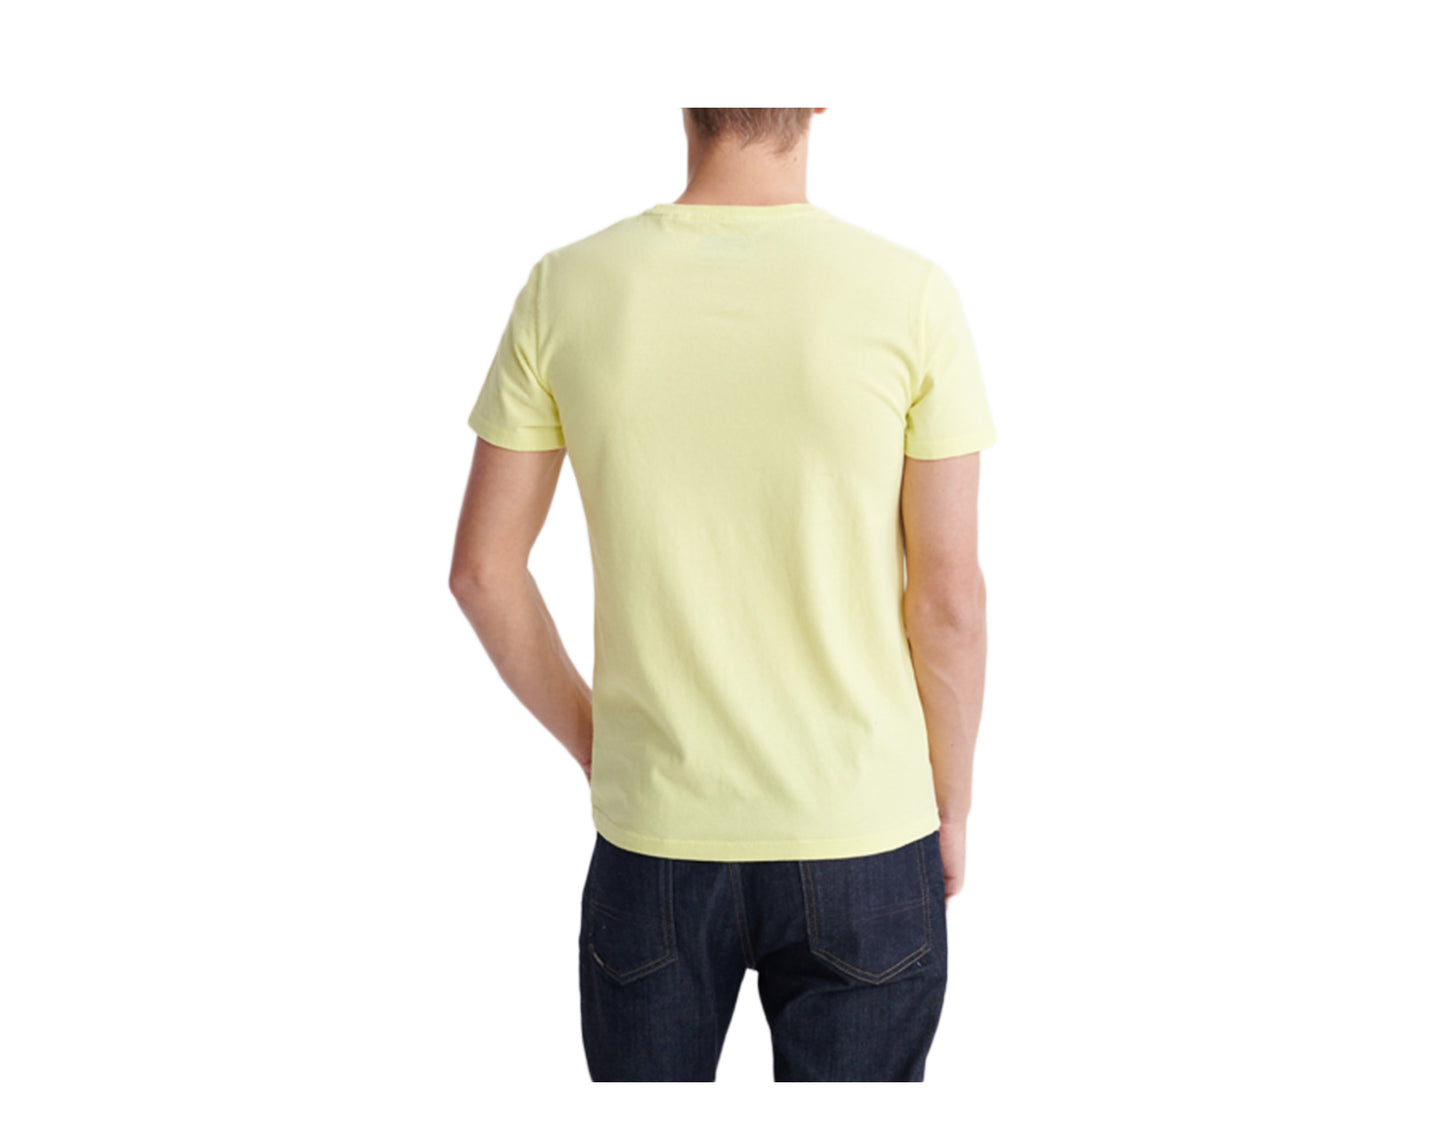 Superdry Organic Cotton Vintage Logo Charlock Green T-Shirt M1010099A-CGRN